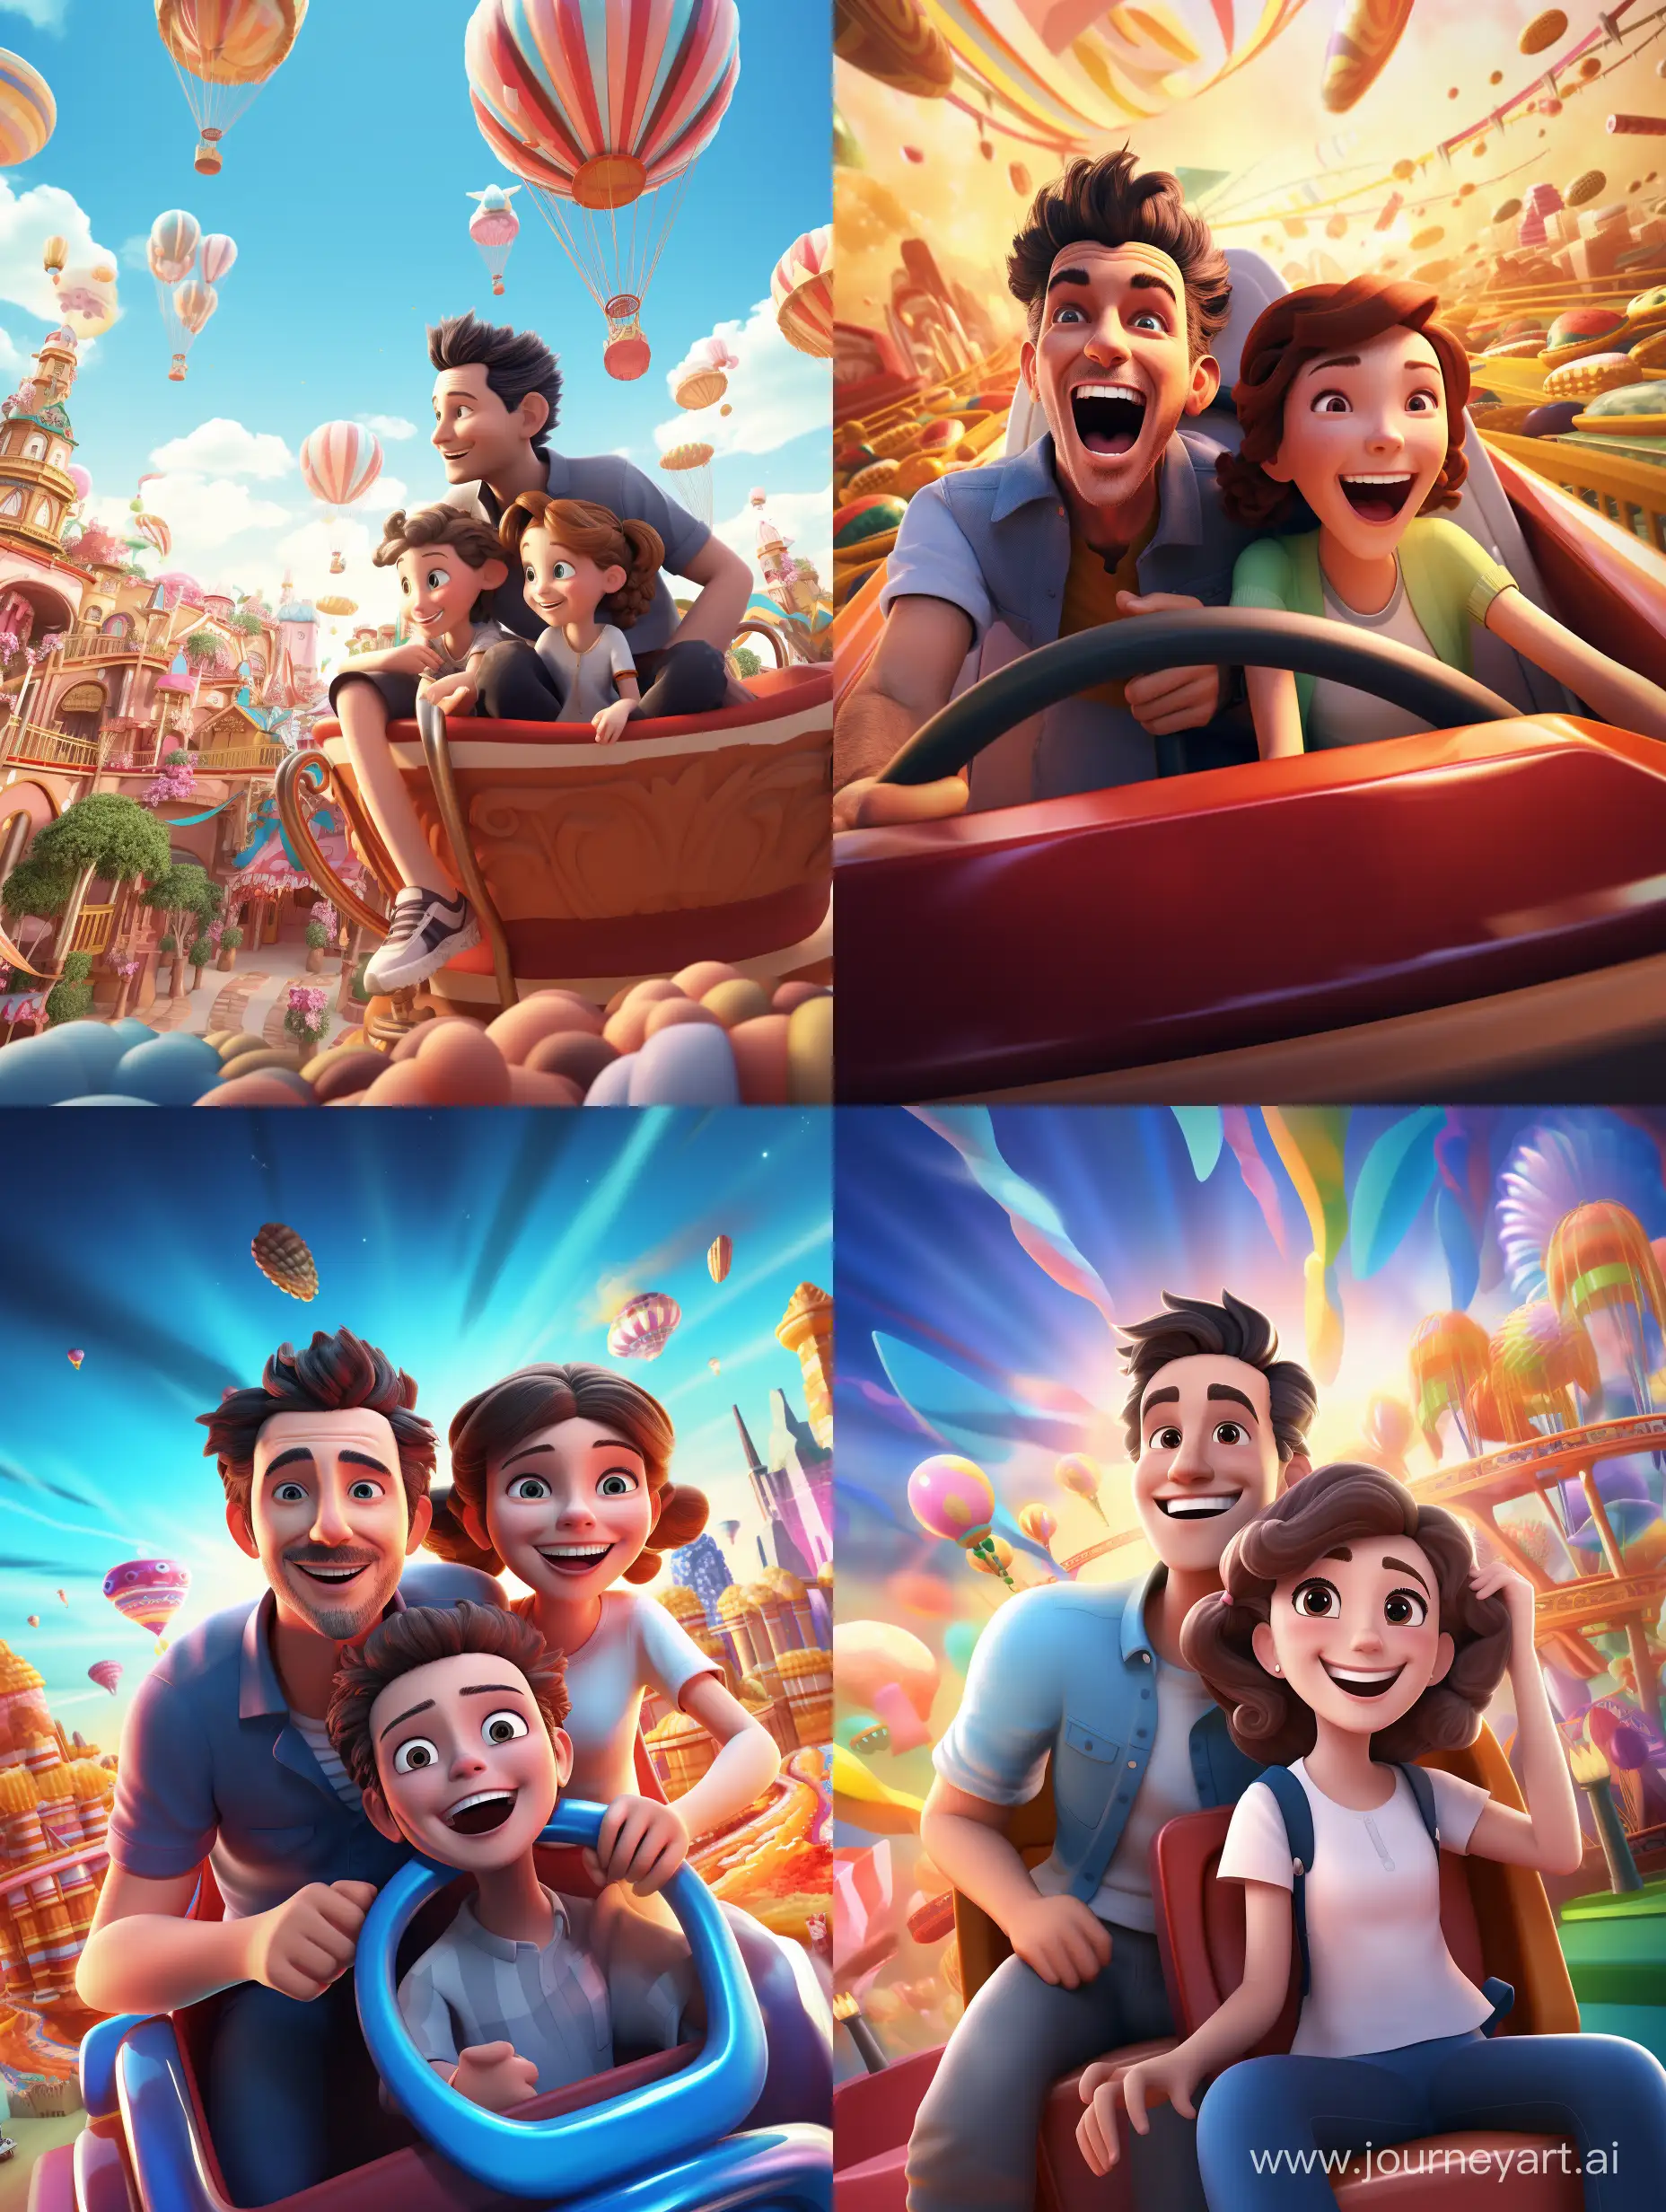 Father-and-Daughter-Enjoying-Disney-Studio-Style-Amusement-Park